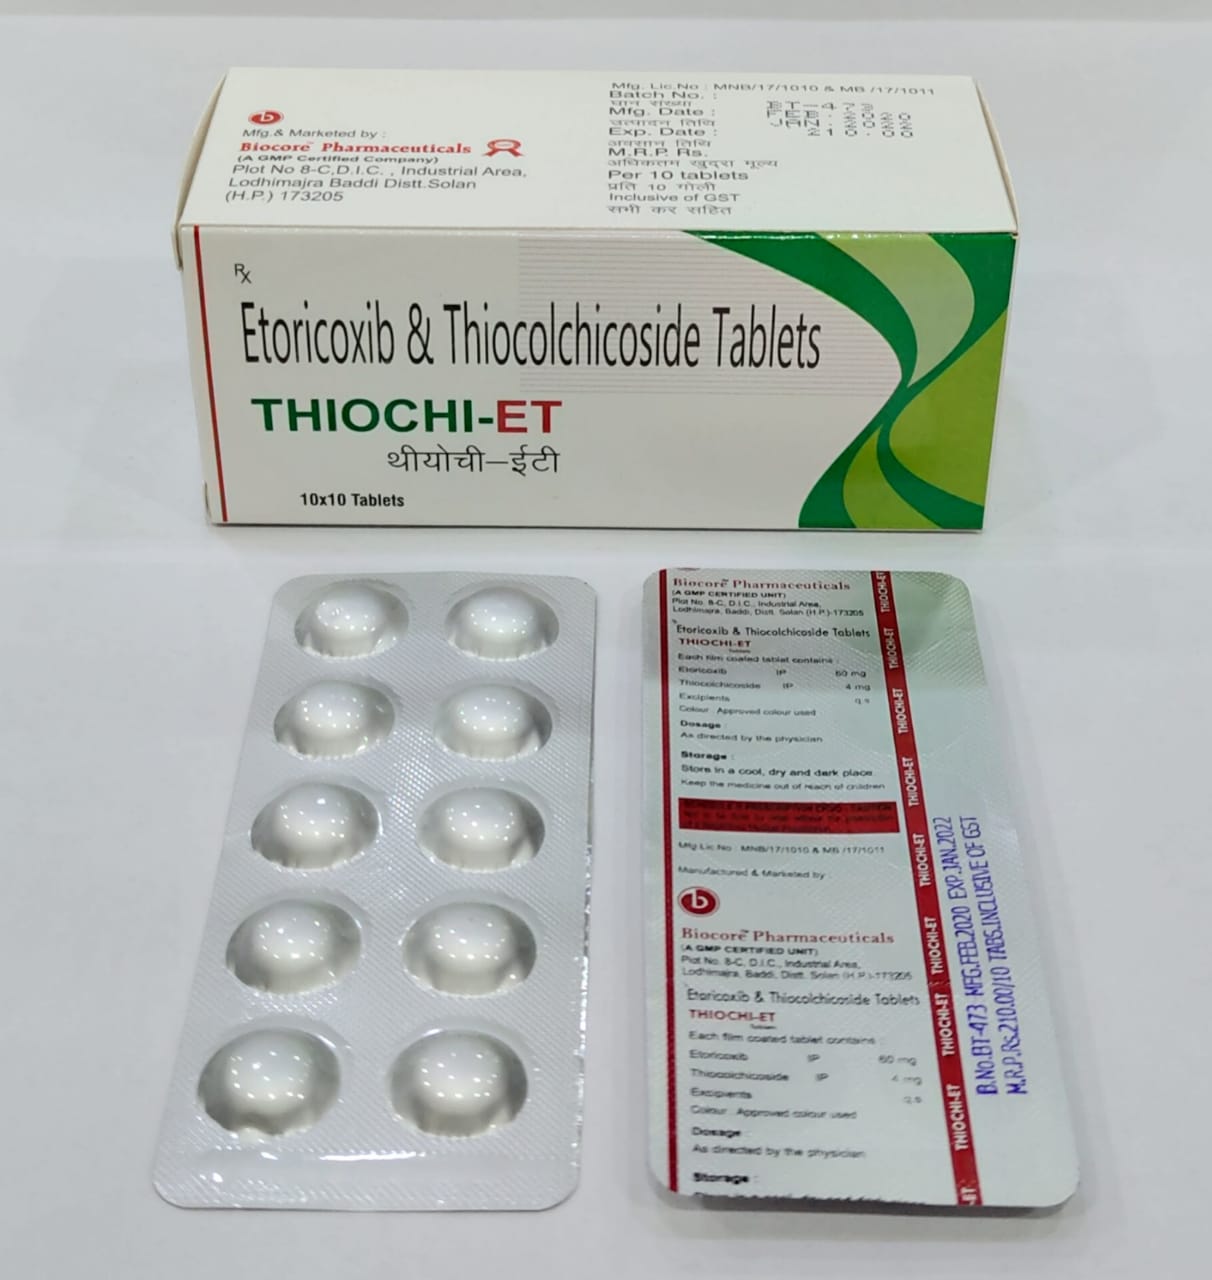 THIOCHI-ET Tablets